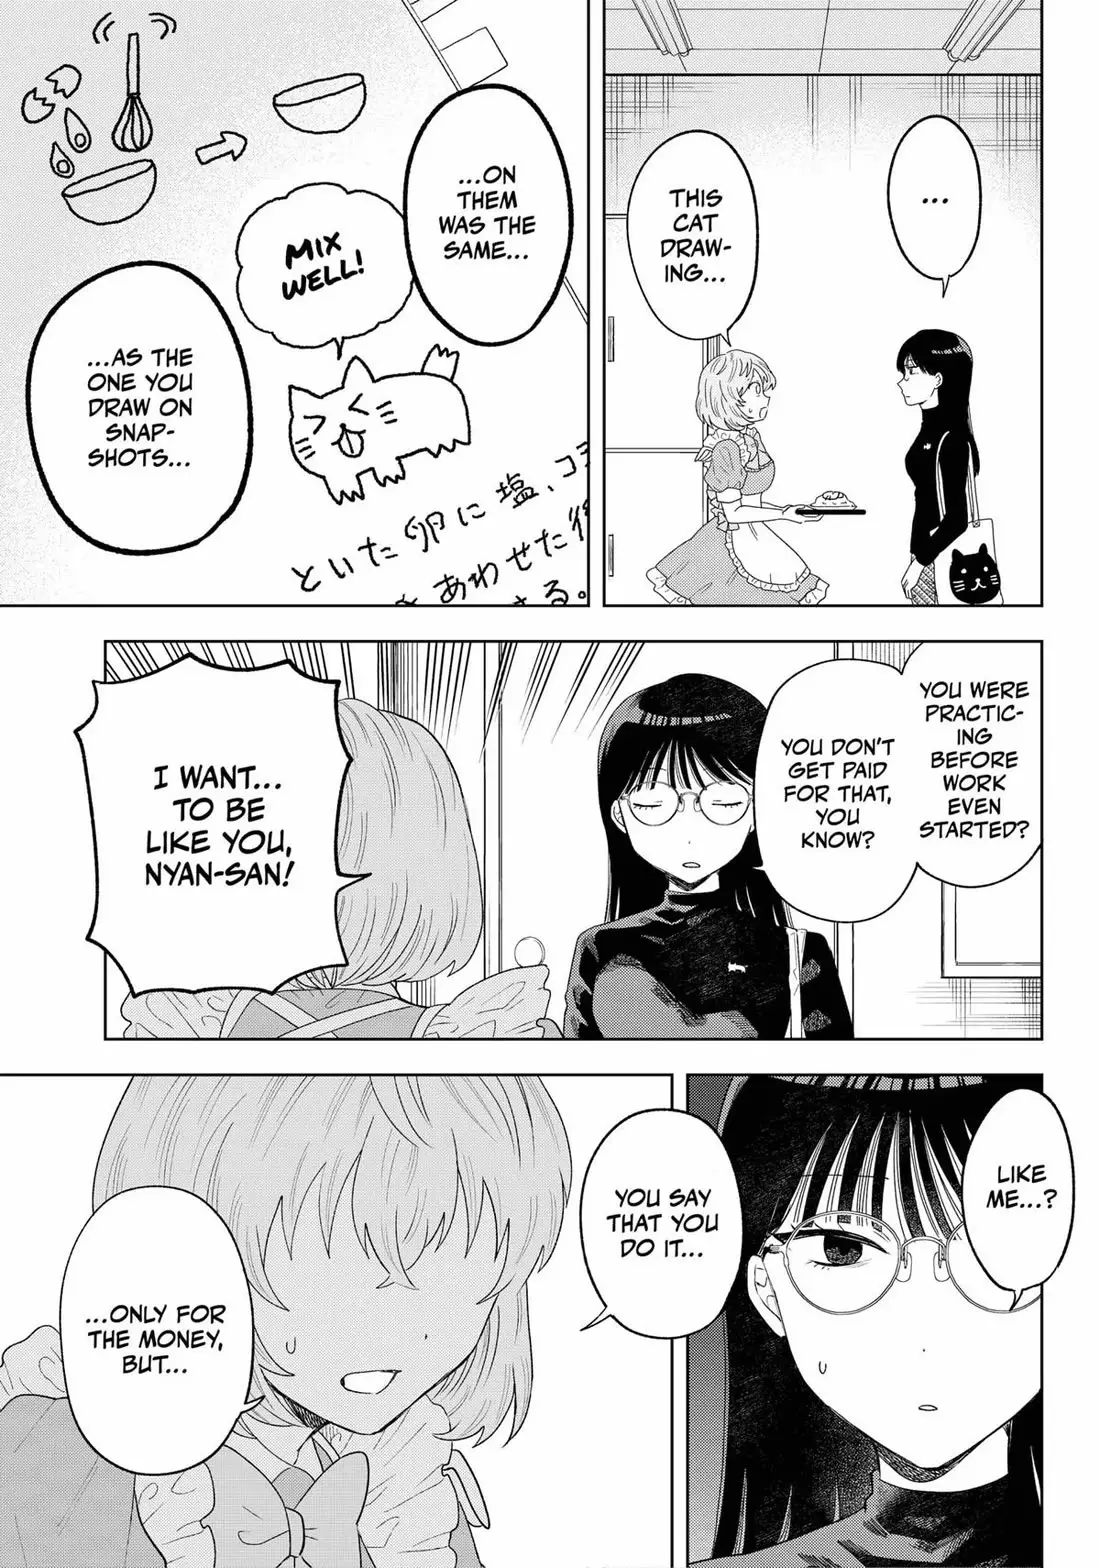 Tsuruko Returns The Favor - 16 page 13-3586895b